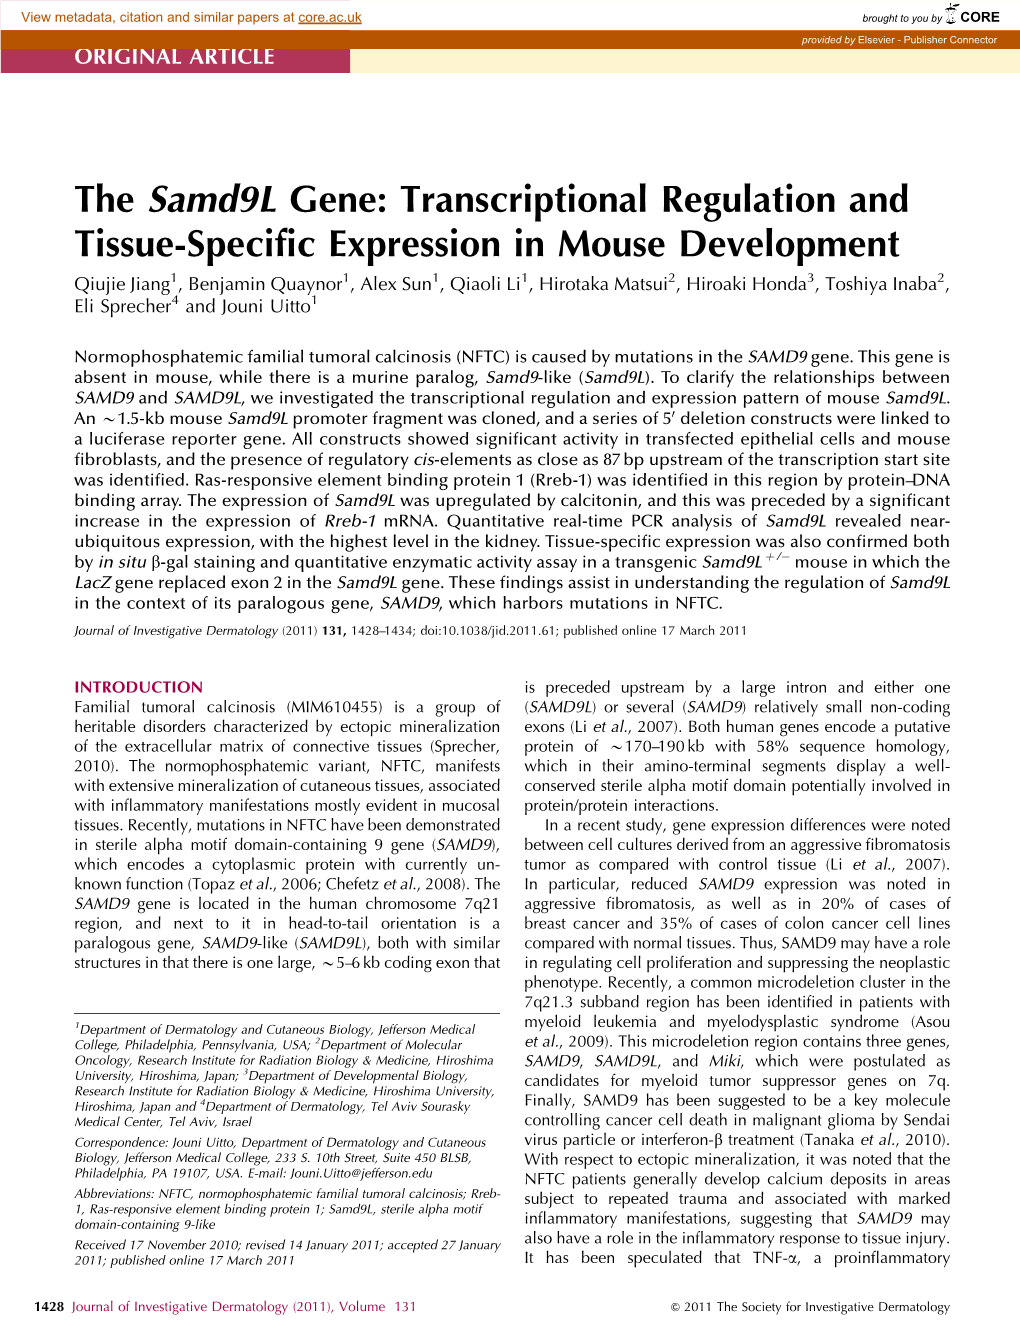 The Samd9l Gene: Transcriptional Regulation and Tissue-Specific